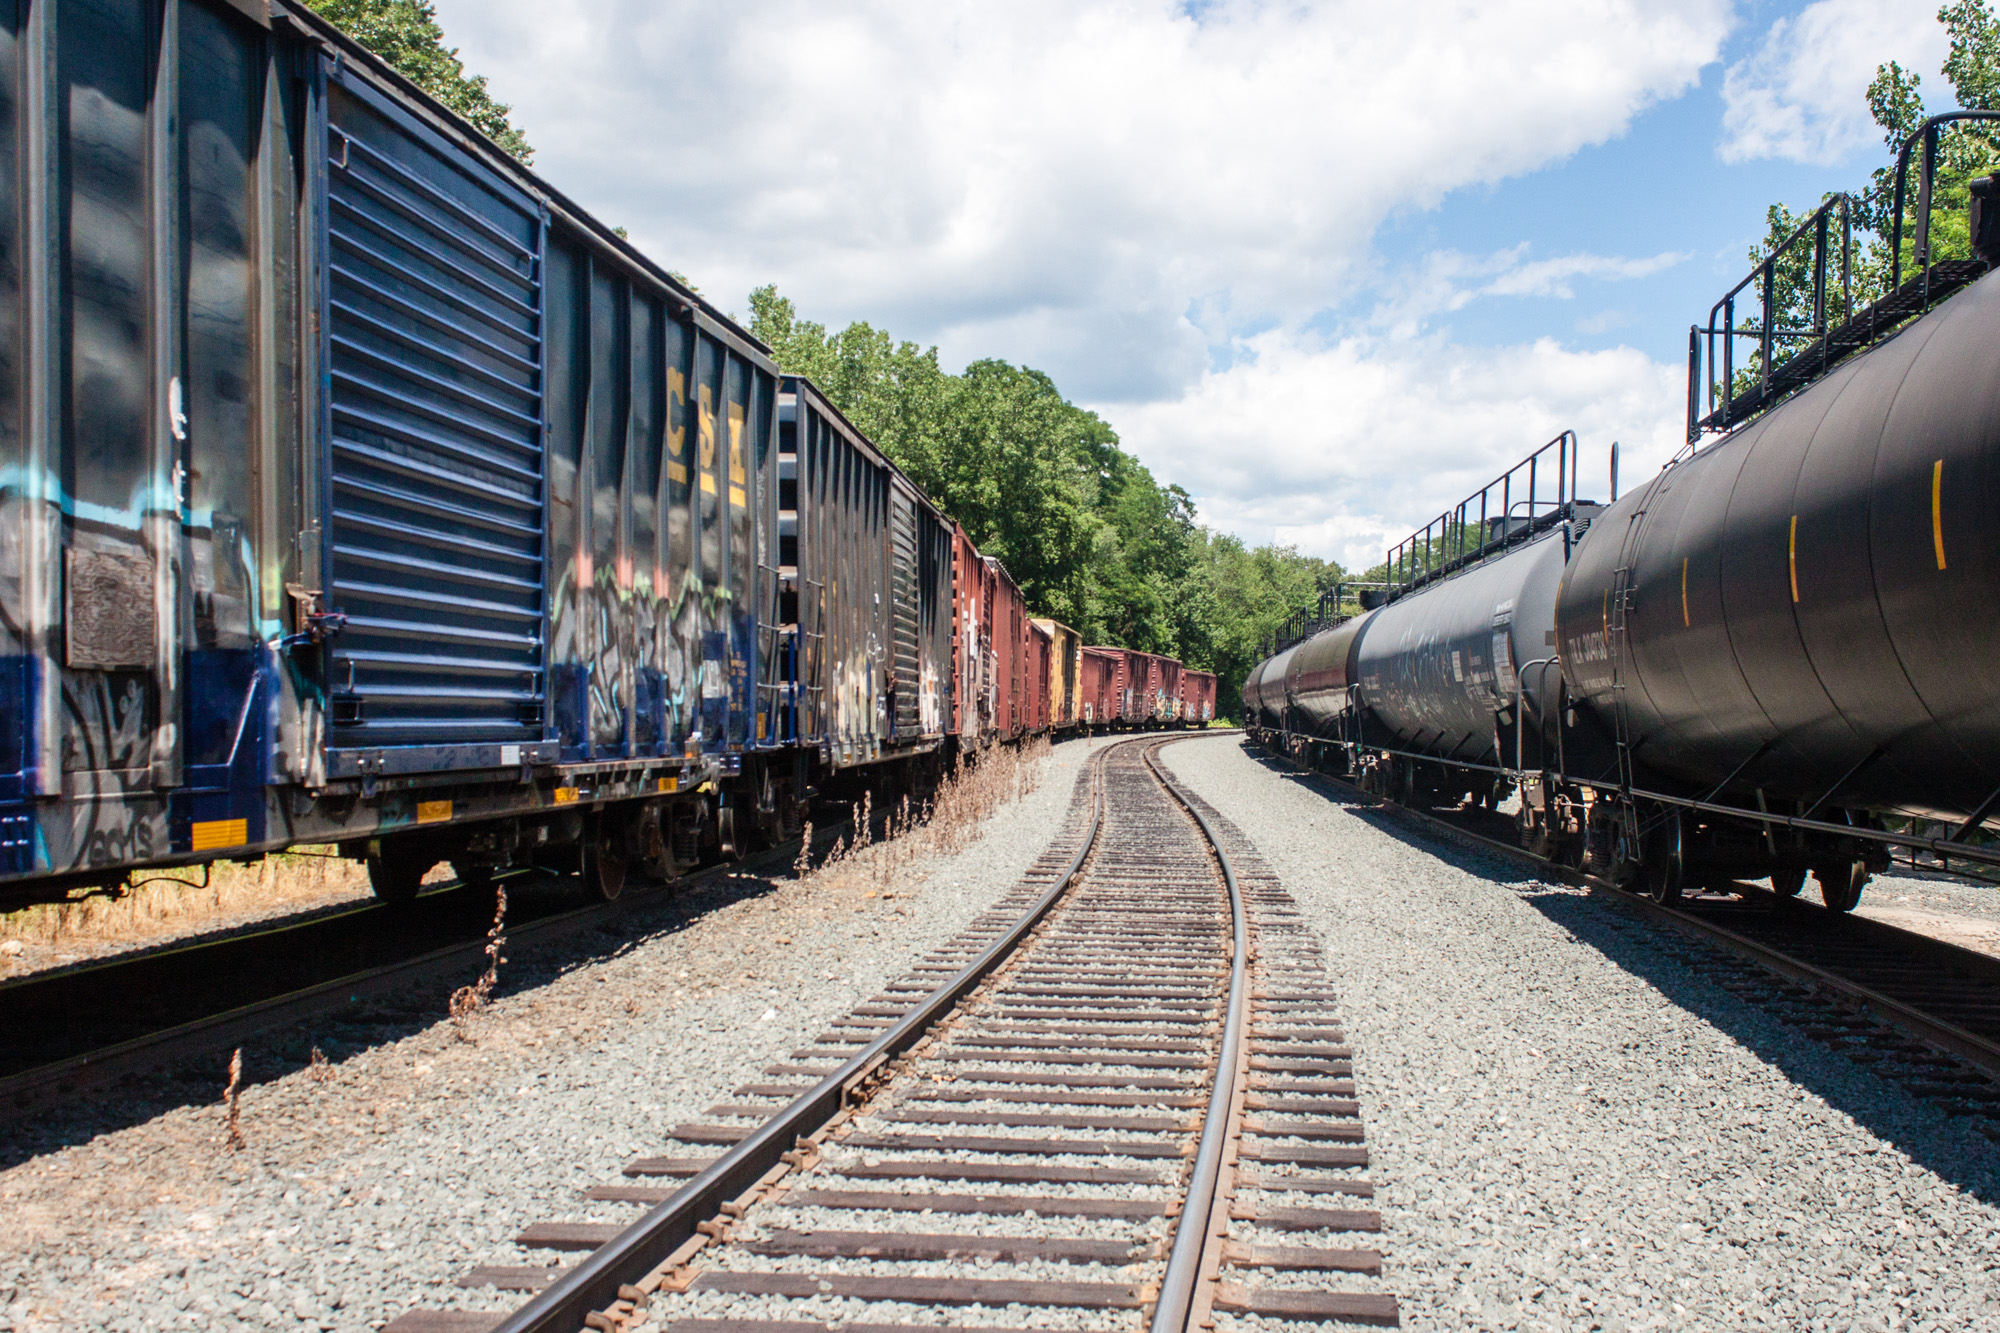 Railroad photography and freight graffiti